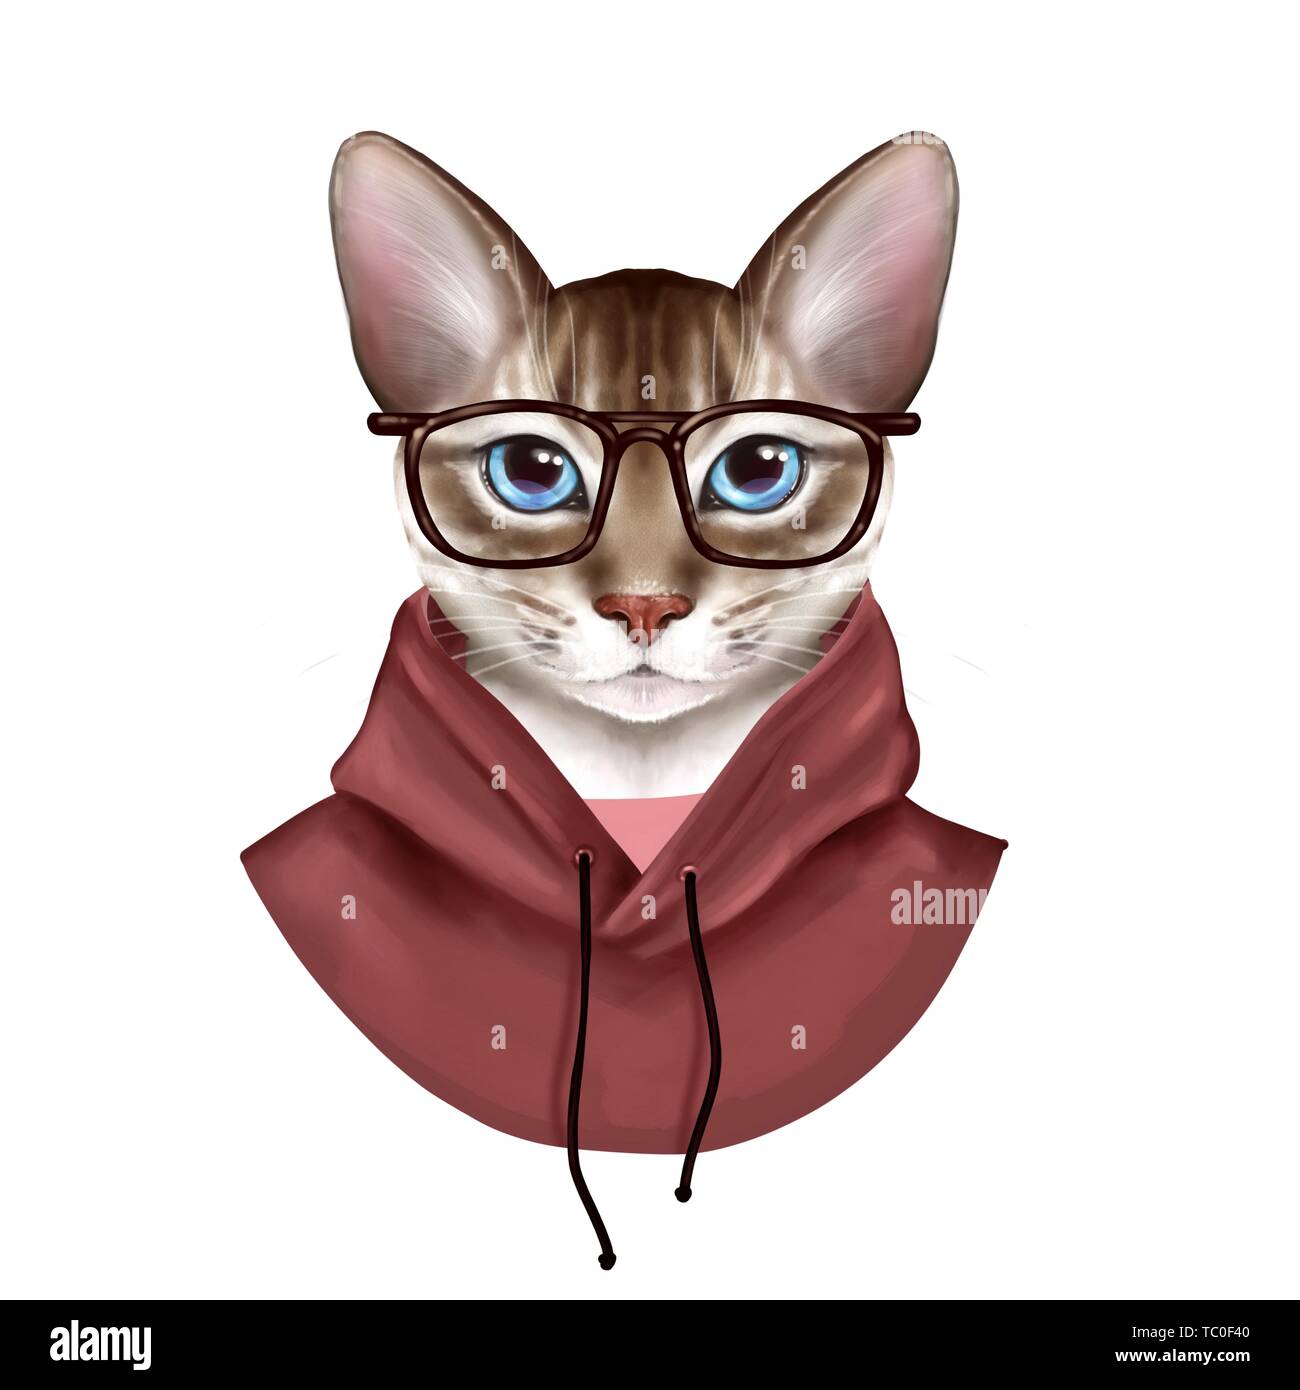 Dressed up cat. Cute illustration Stock Photo